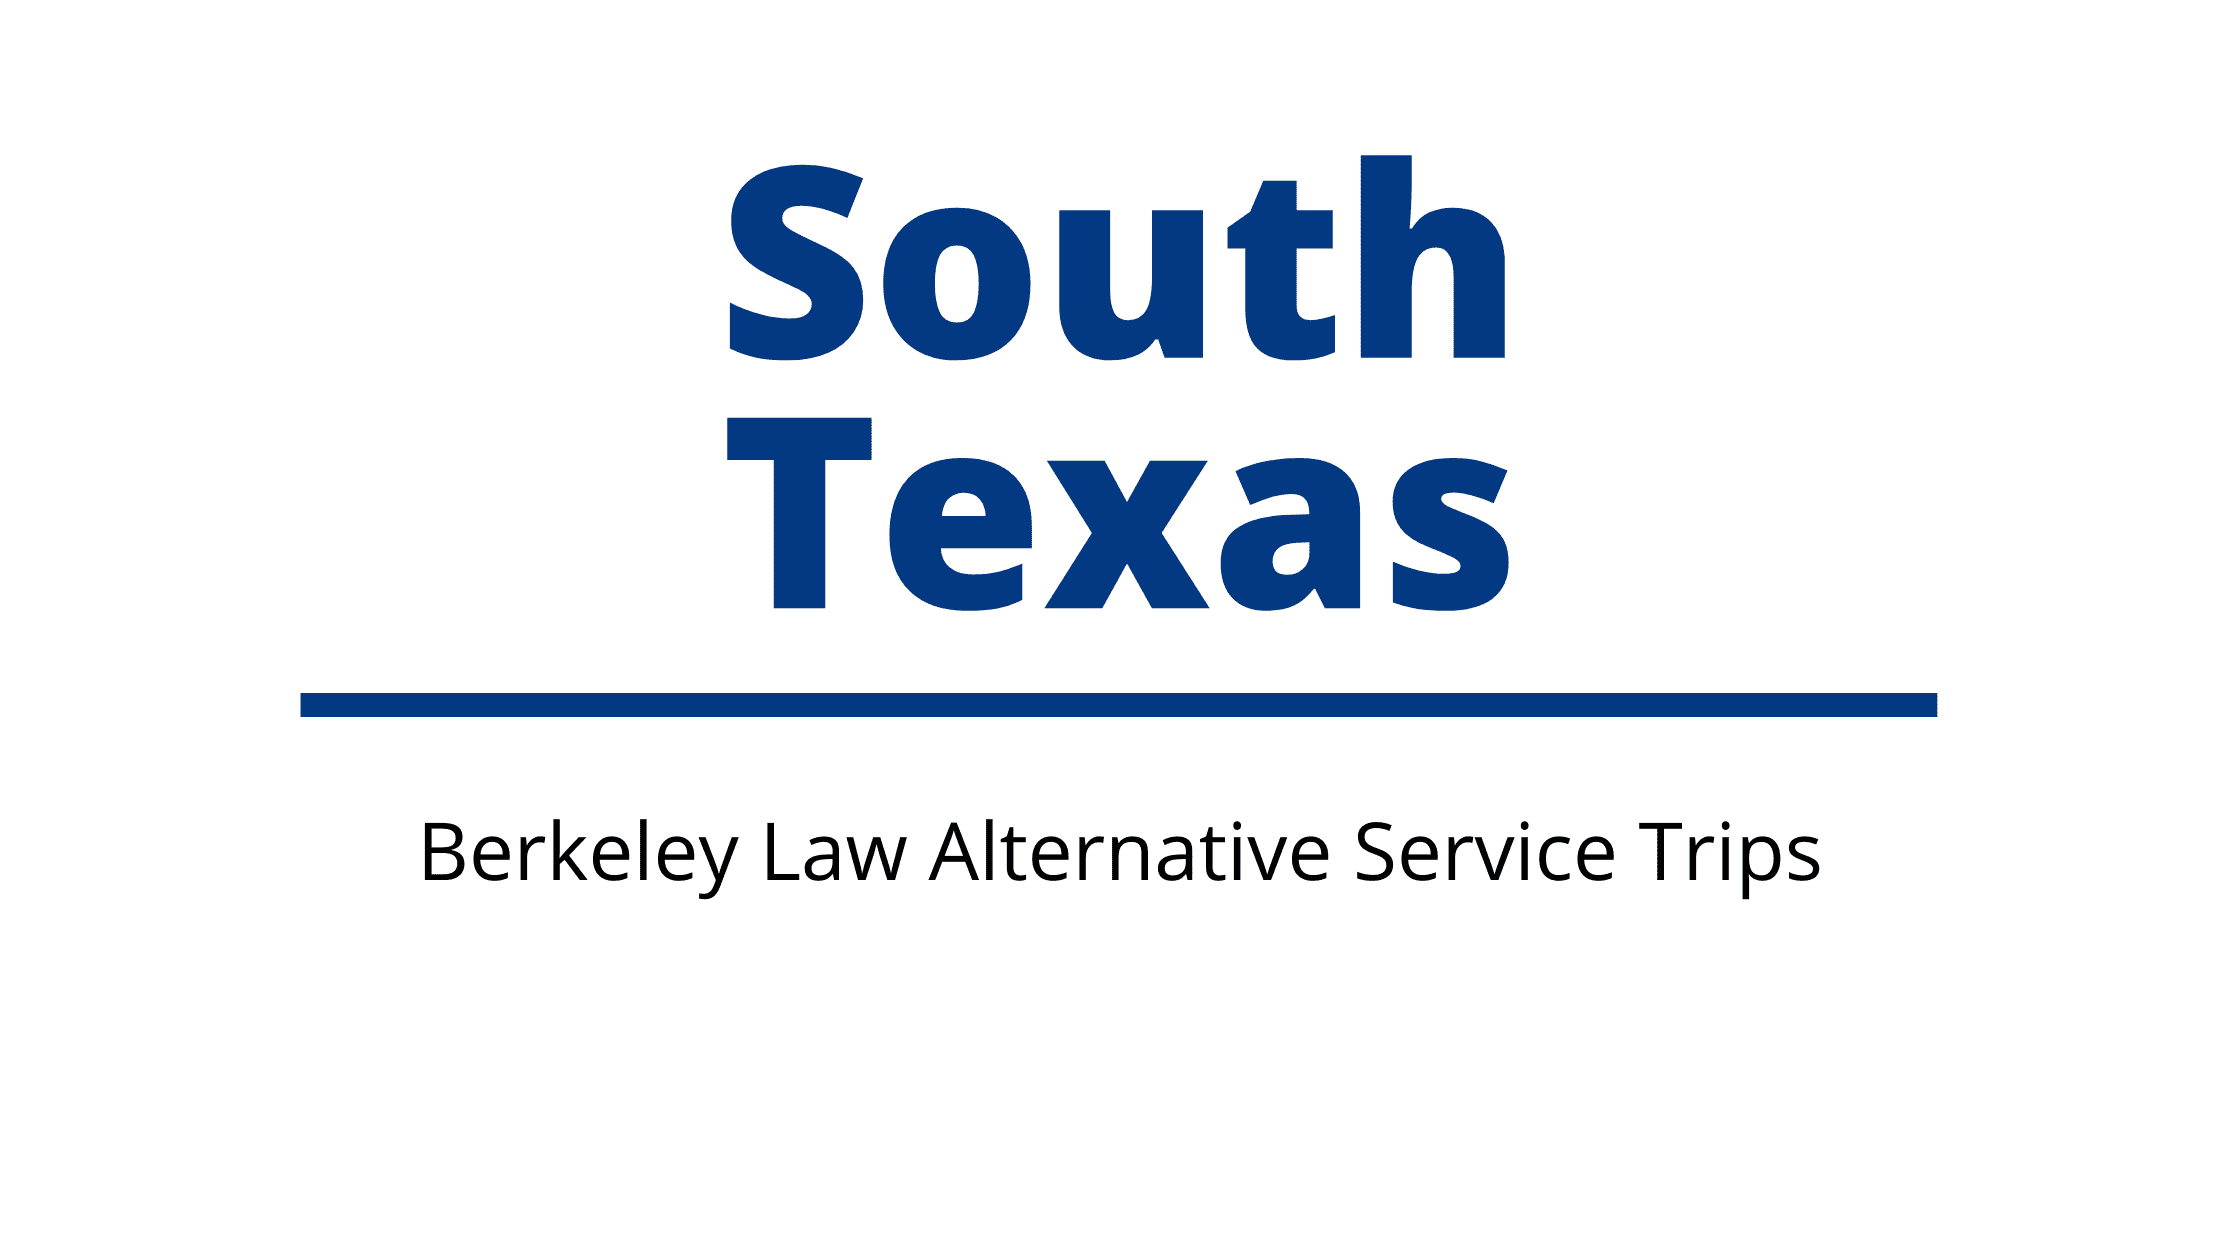 South Texas Berkeley Law Alternative Service Trips Logo